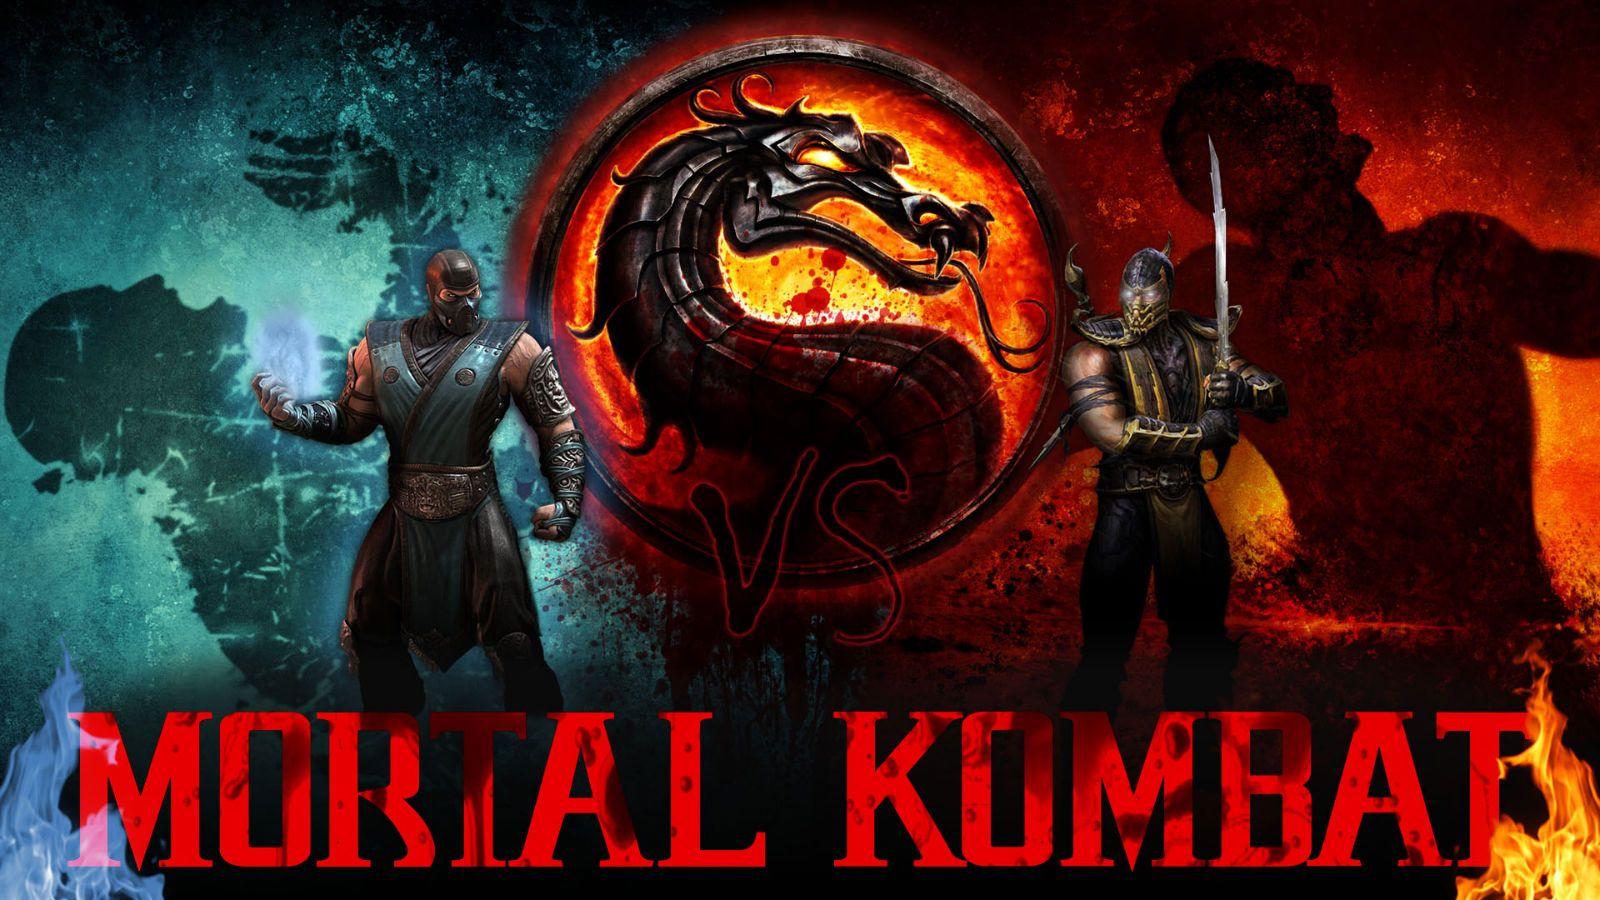 Mortal Kombat 9 (Scorpion Vs Sub Zero) Made A While Back